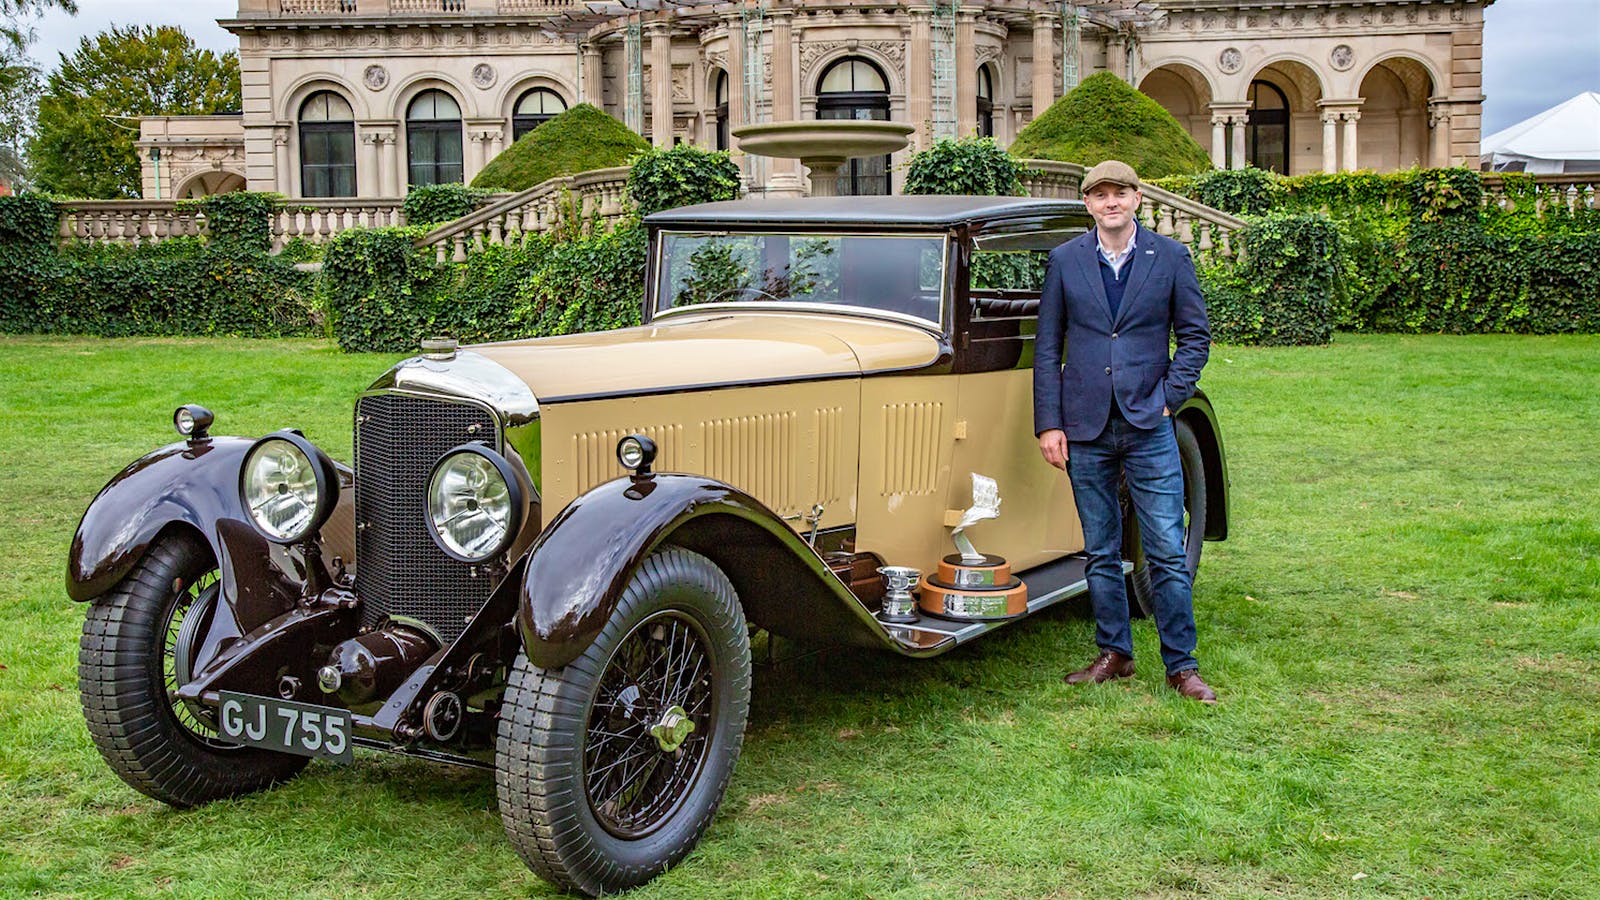 A 1930 Bentley Wins Top Award At World-Class Car Show In Newport